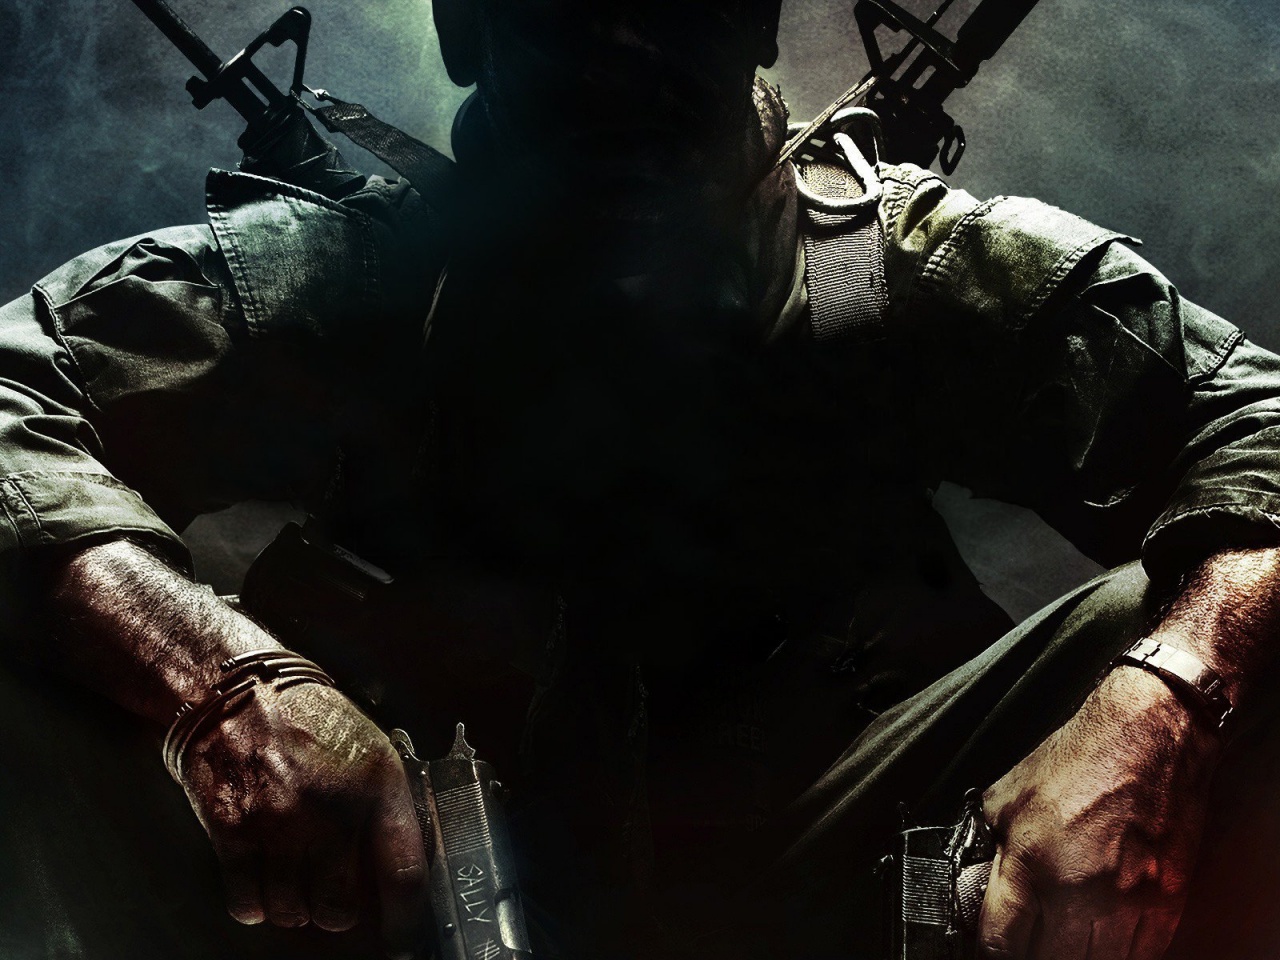 Call Of Duty Black Ops Desktop Pc And Mac Wallpaper